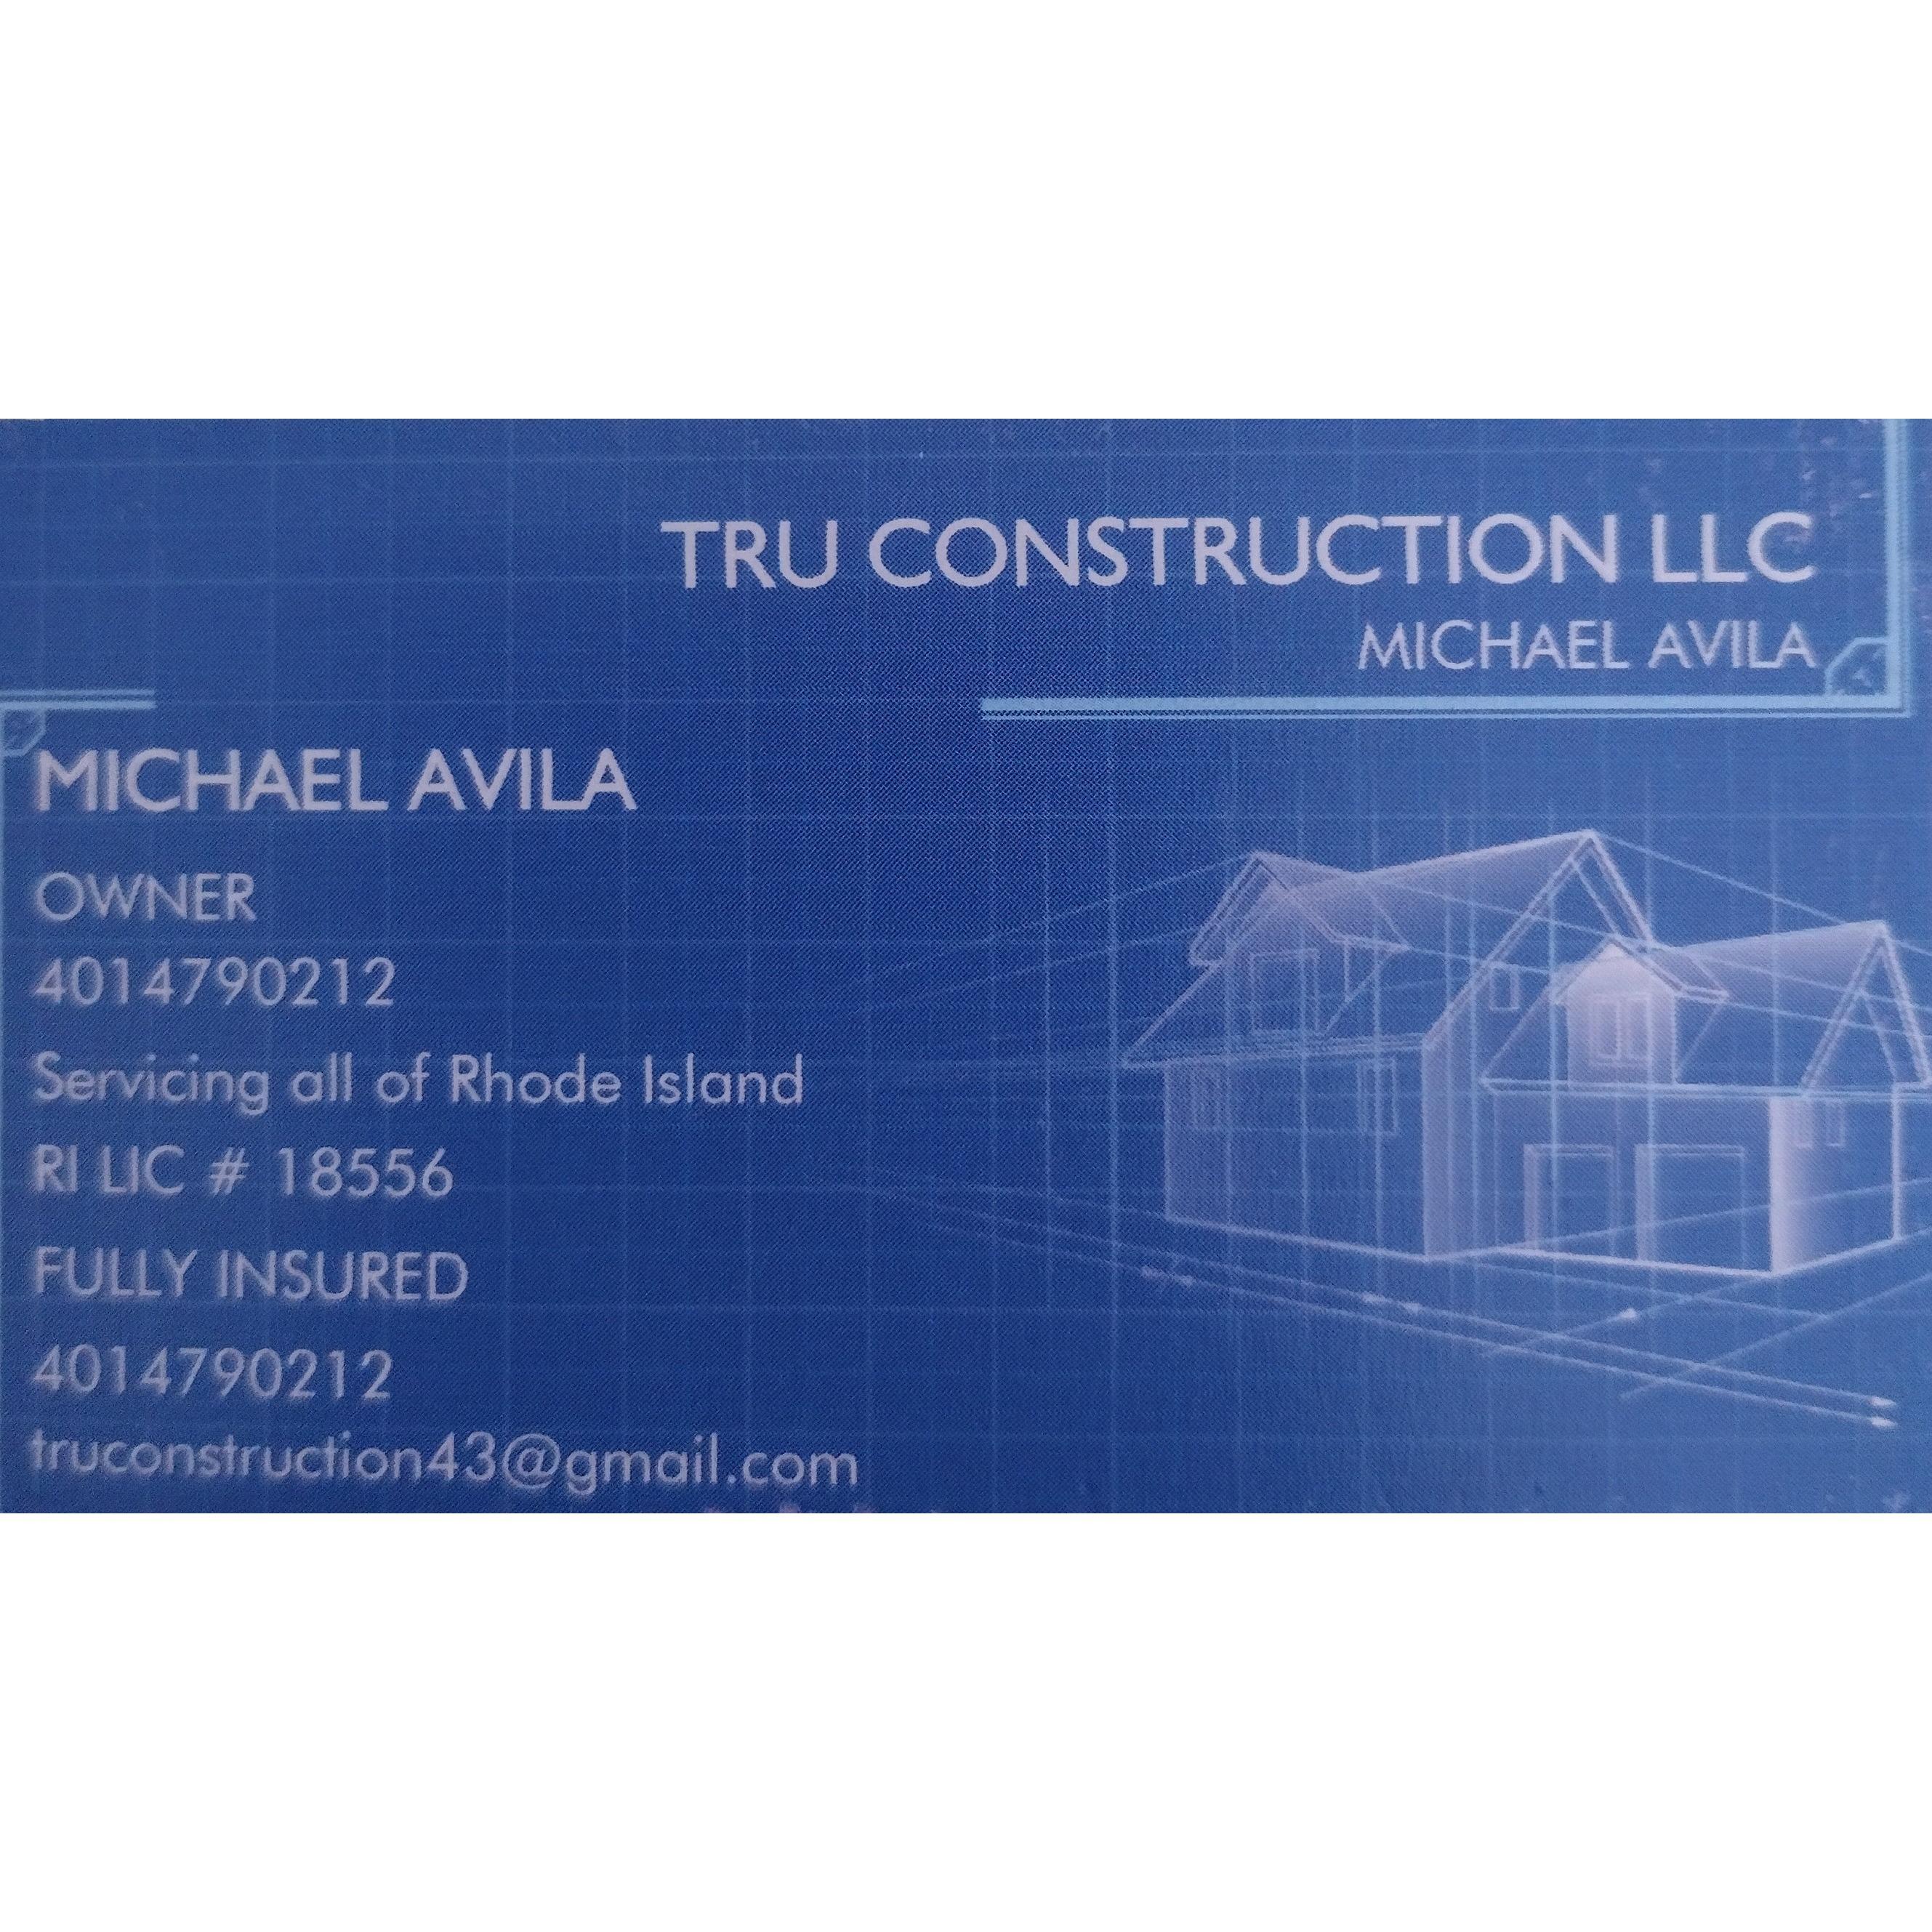 Tru Construction LLC